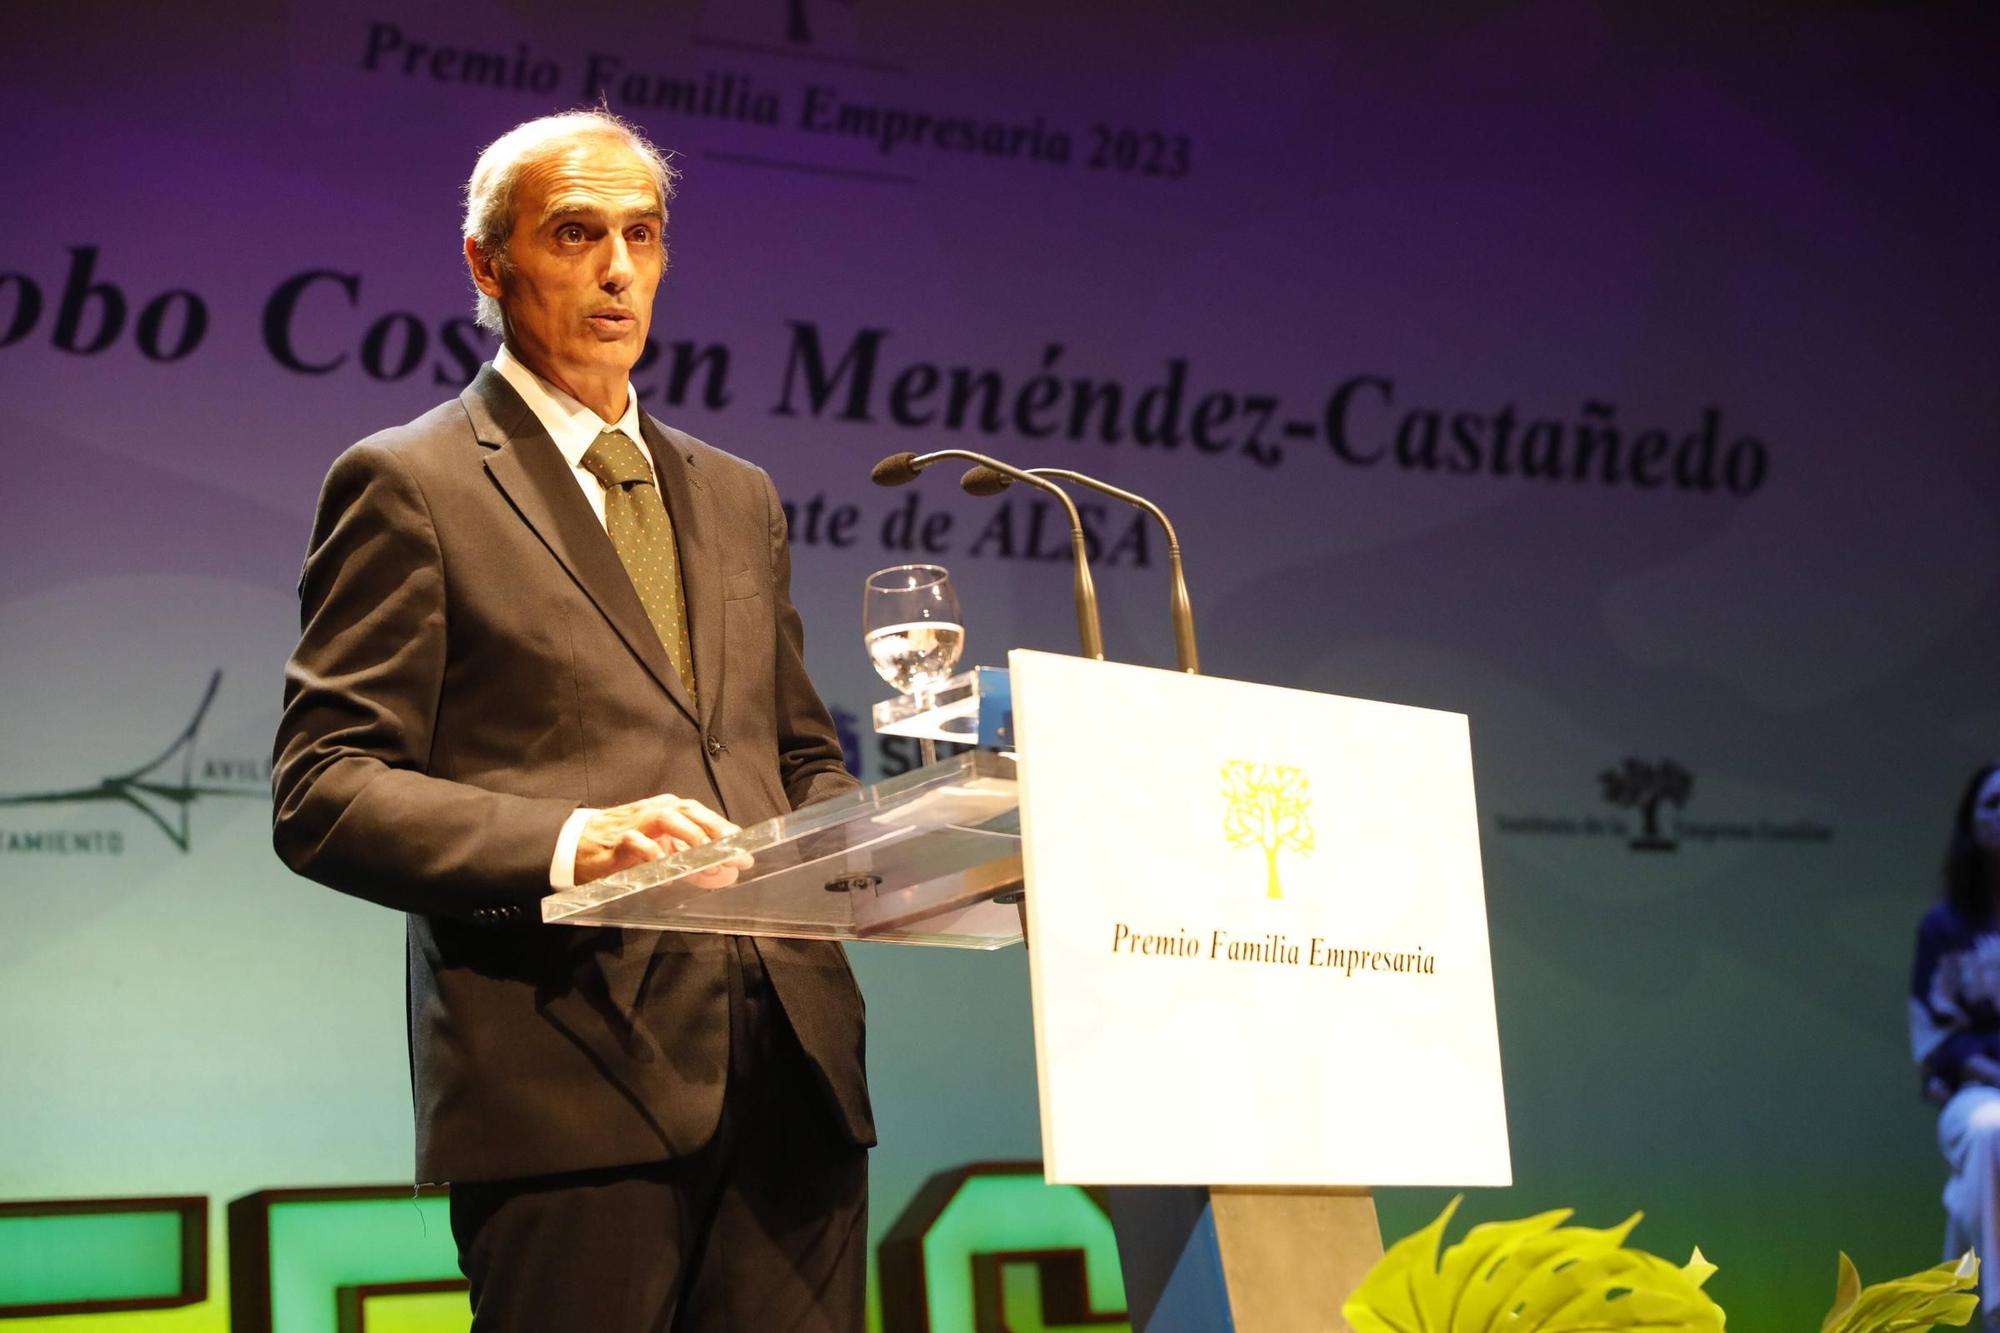 Entrega del premio "Familia Empresaria" a la familia Cosmen Menéndez-Castañedo